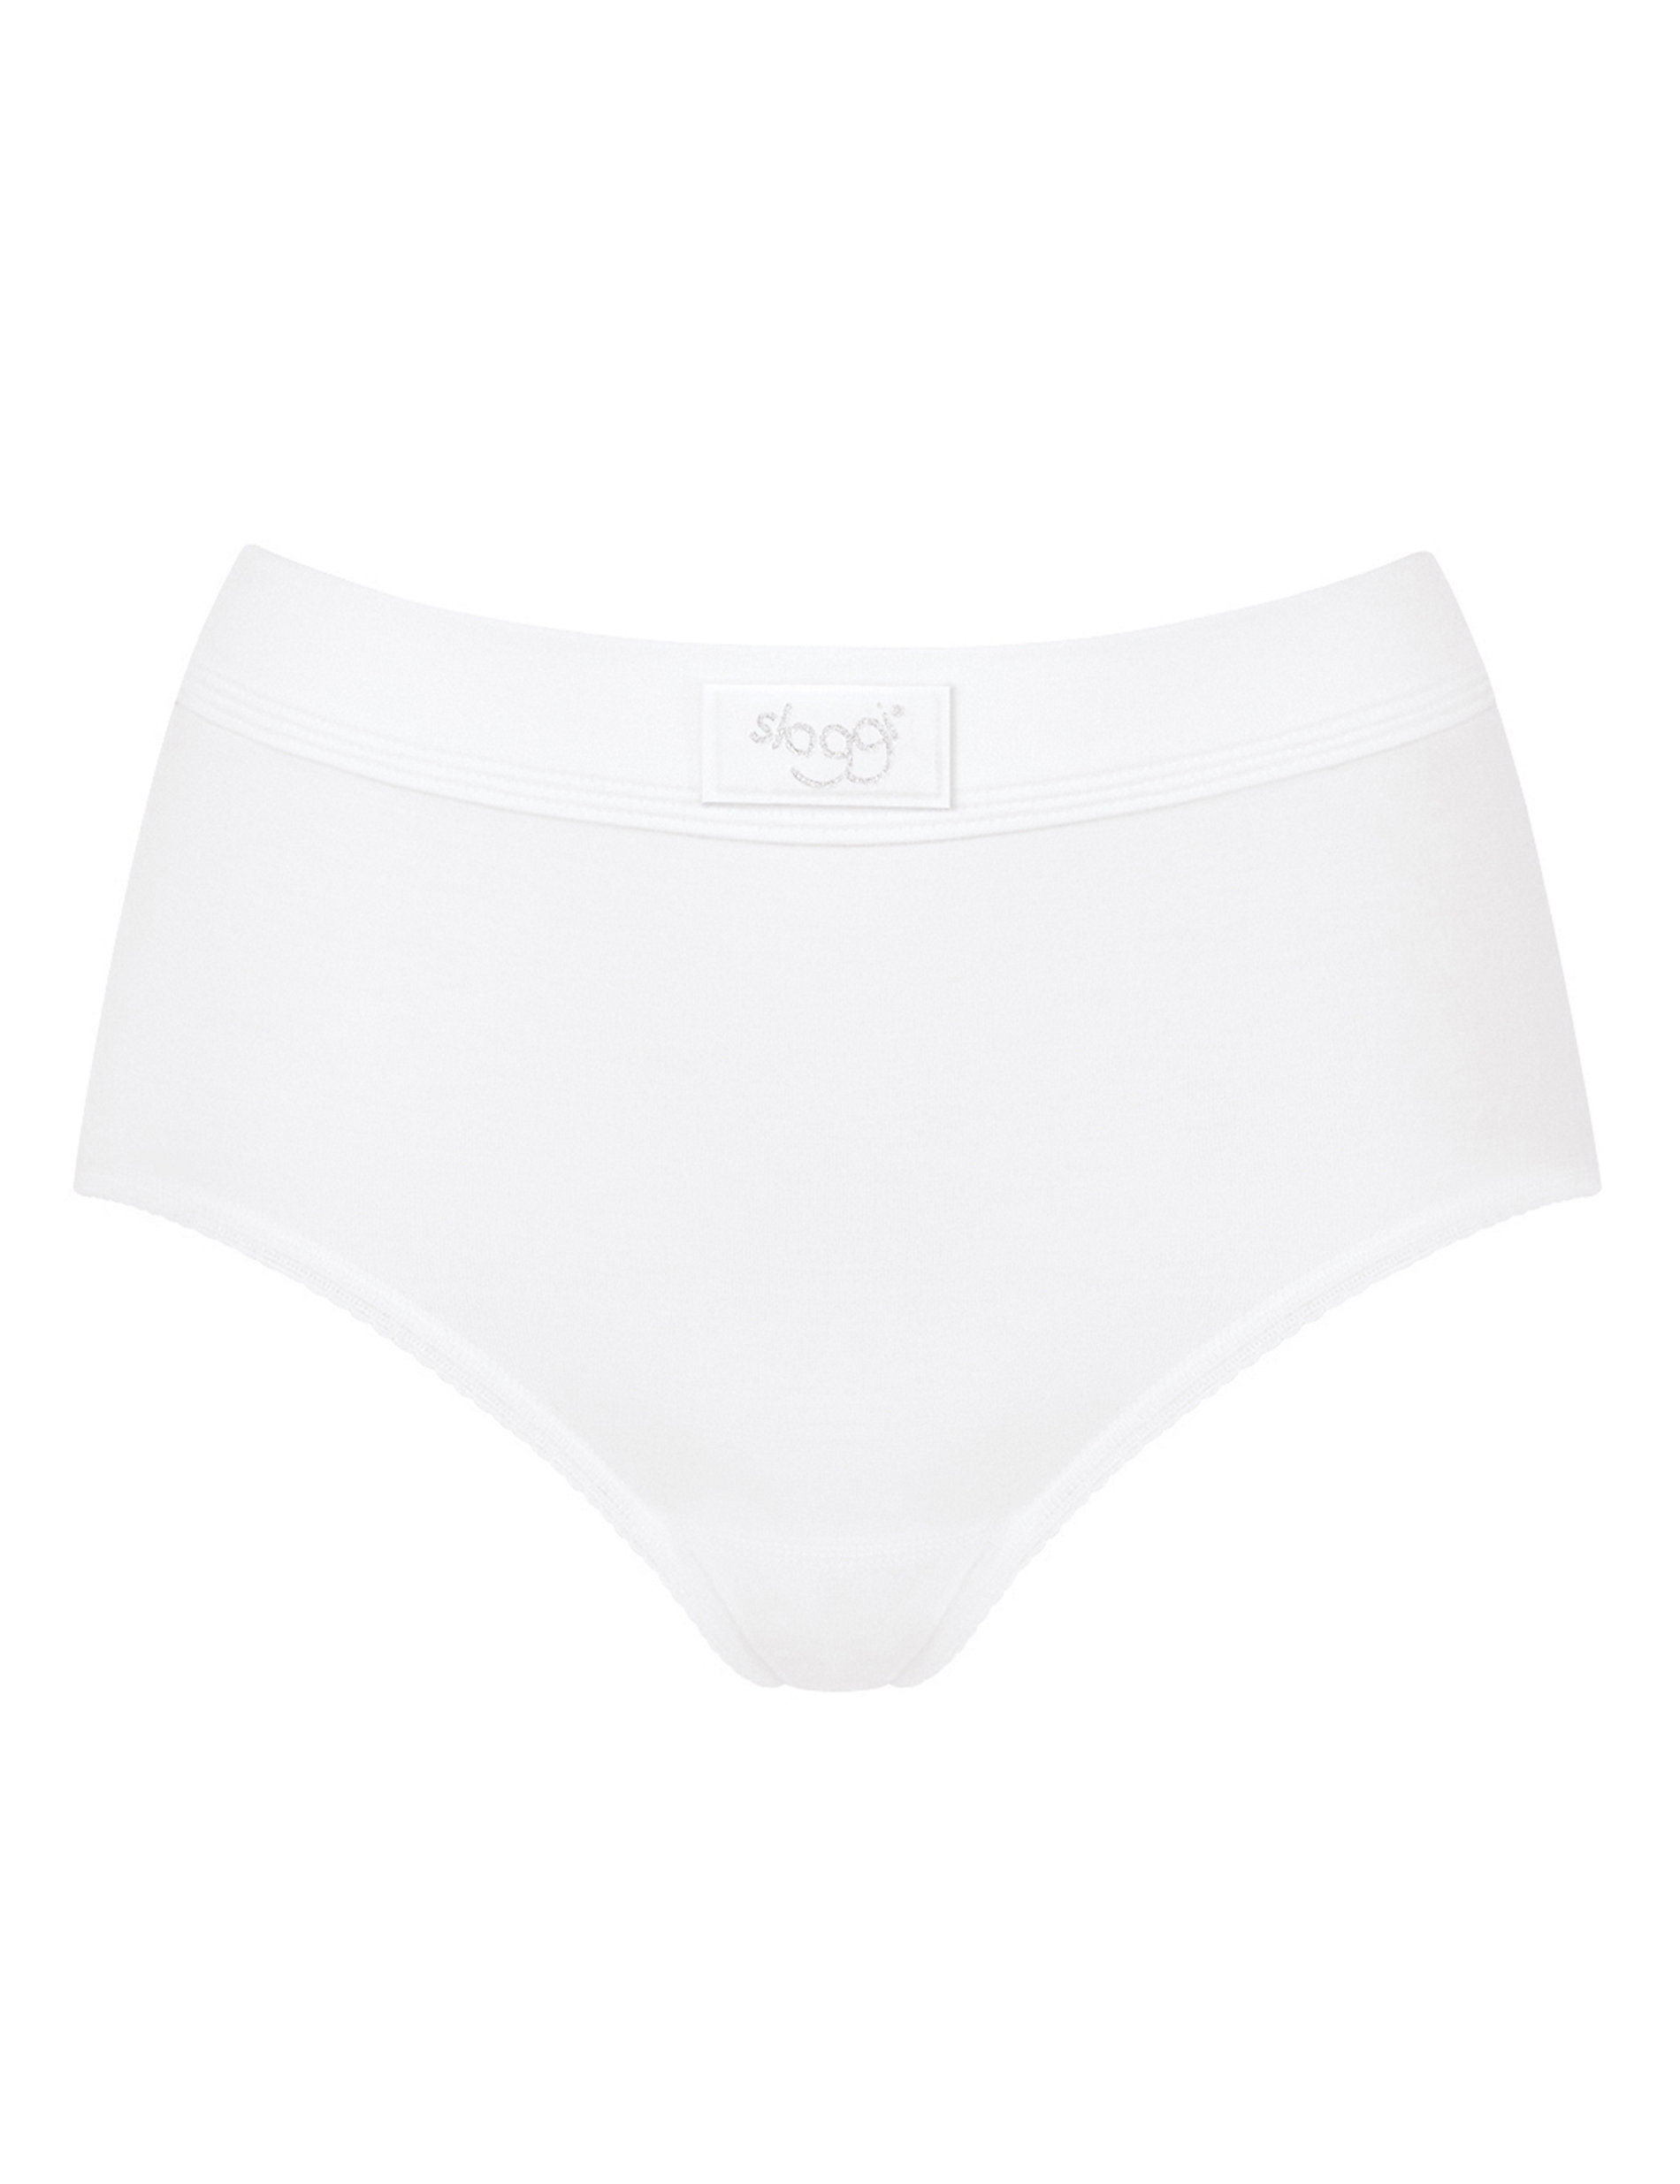 Sloggi size 18 Basic Maxi Briefs knickers panties pants cotton rich White